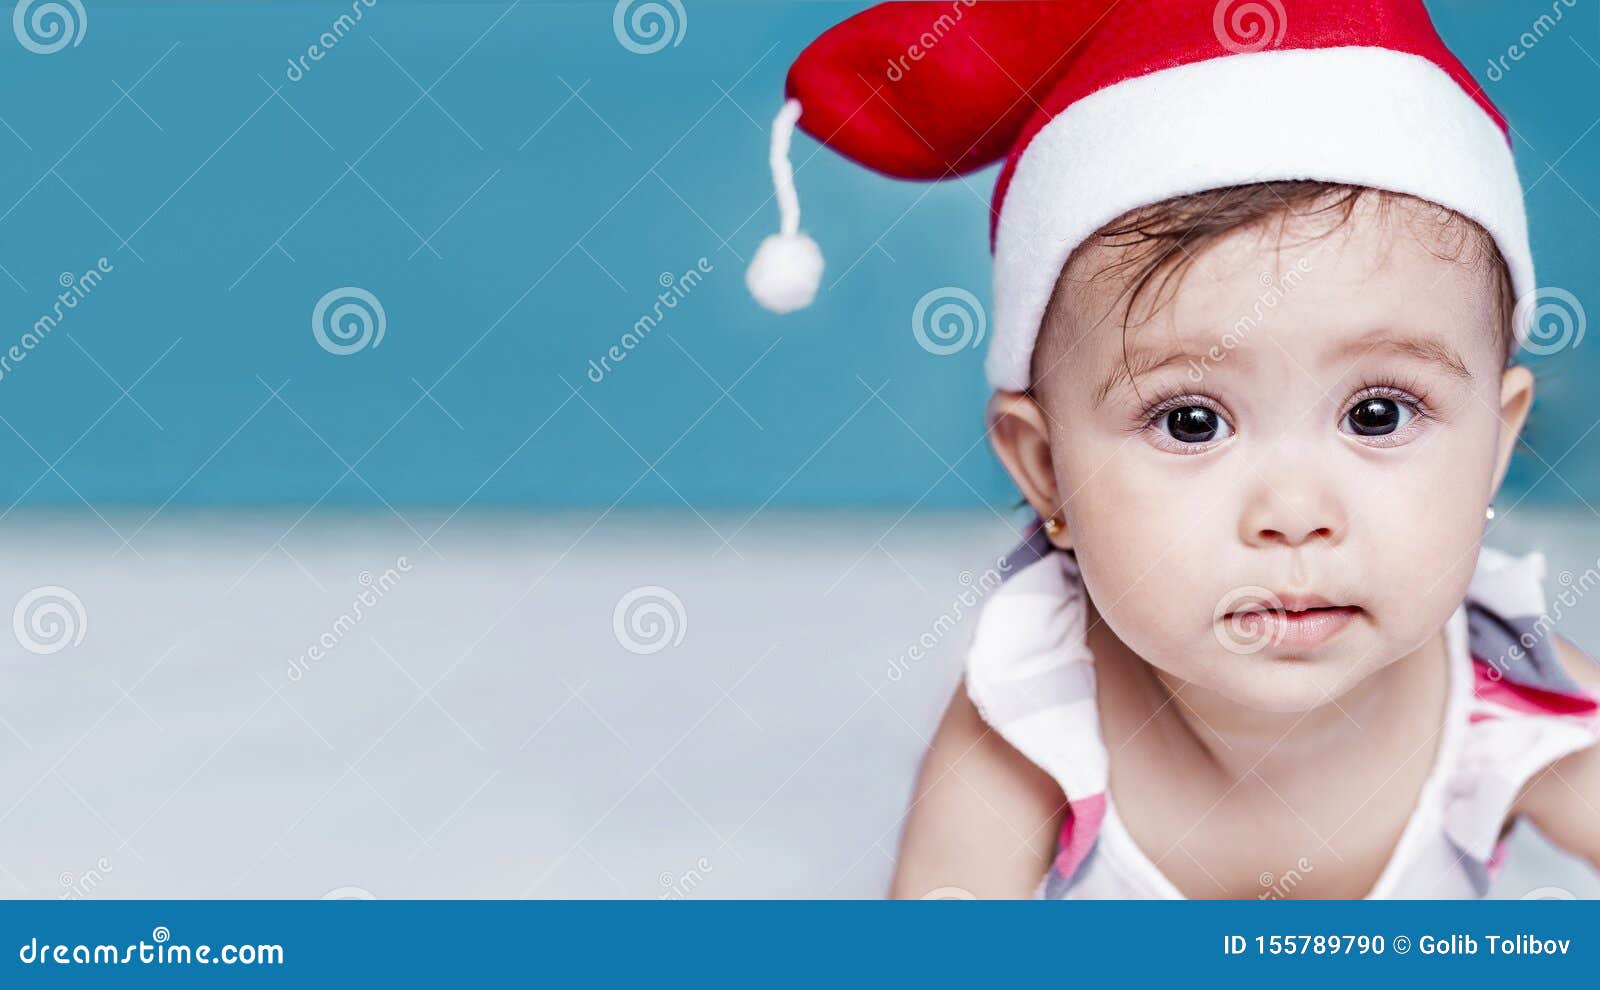 santa claus cap for baby